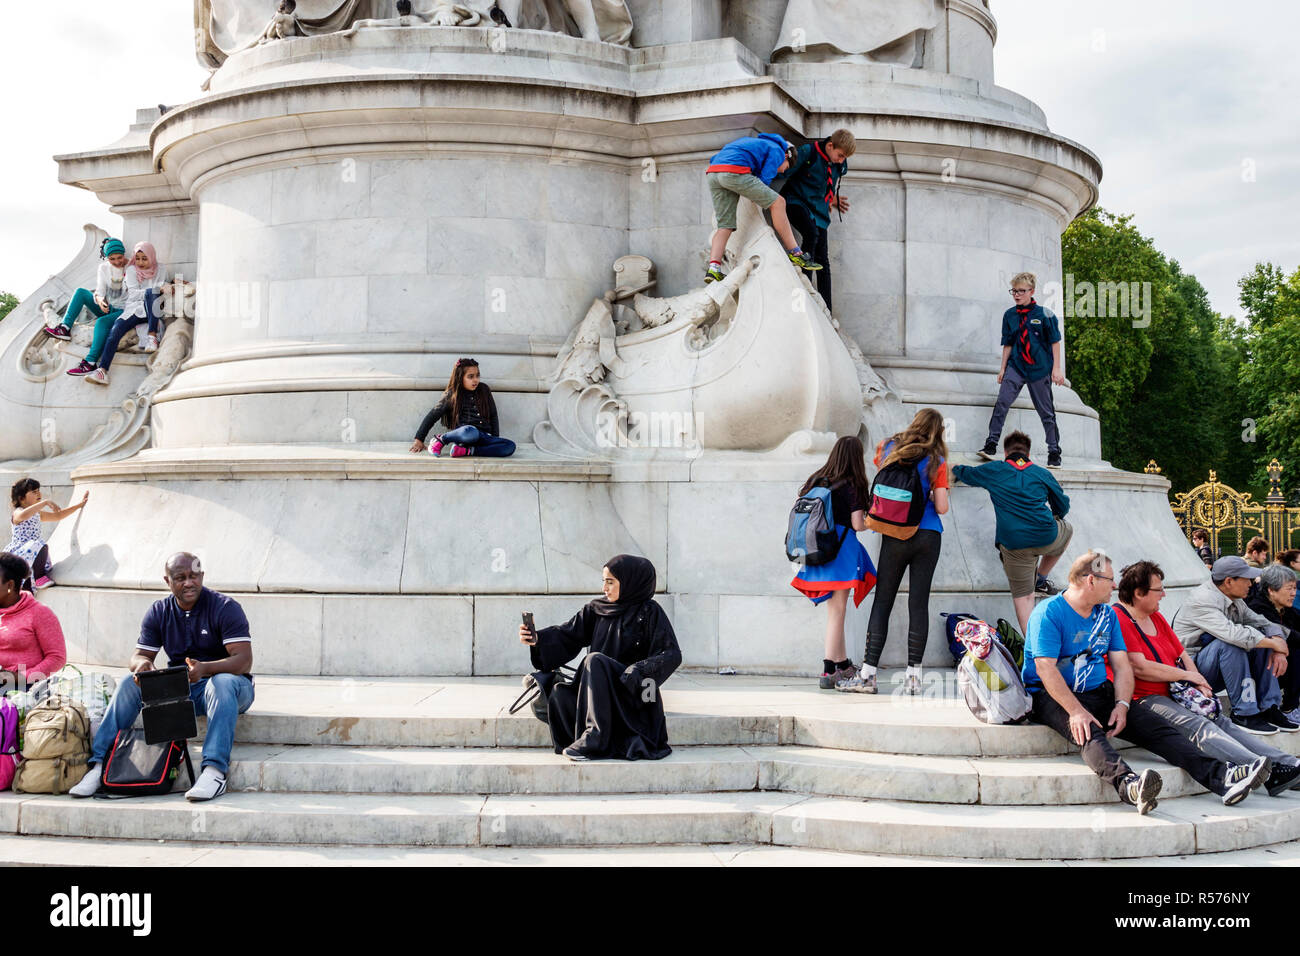 Londra Inghilterra,Regno Unito,Westminster,Buckingham Palace Victoria Memorial,monumento,Black Muslim,uomo uomo maschio,donna femmina donne,bambini che giocano a arrampicata,sitt Foto Stock